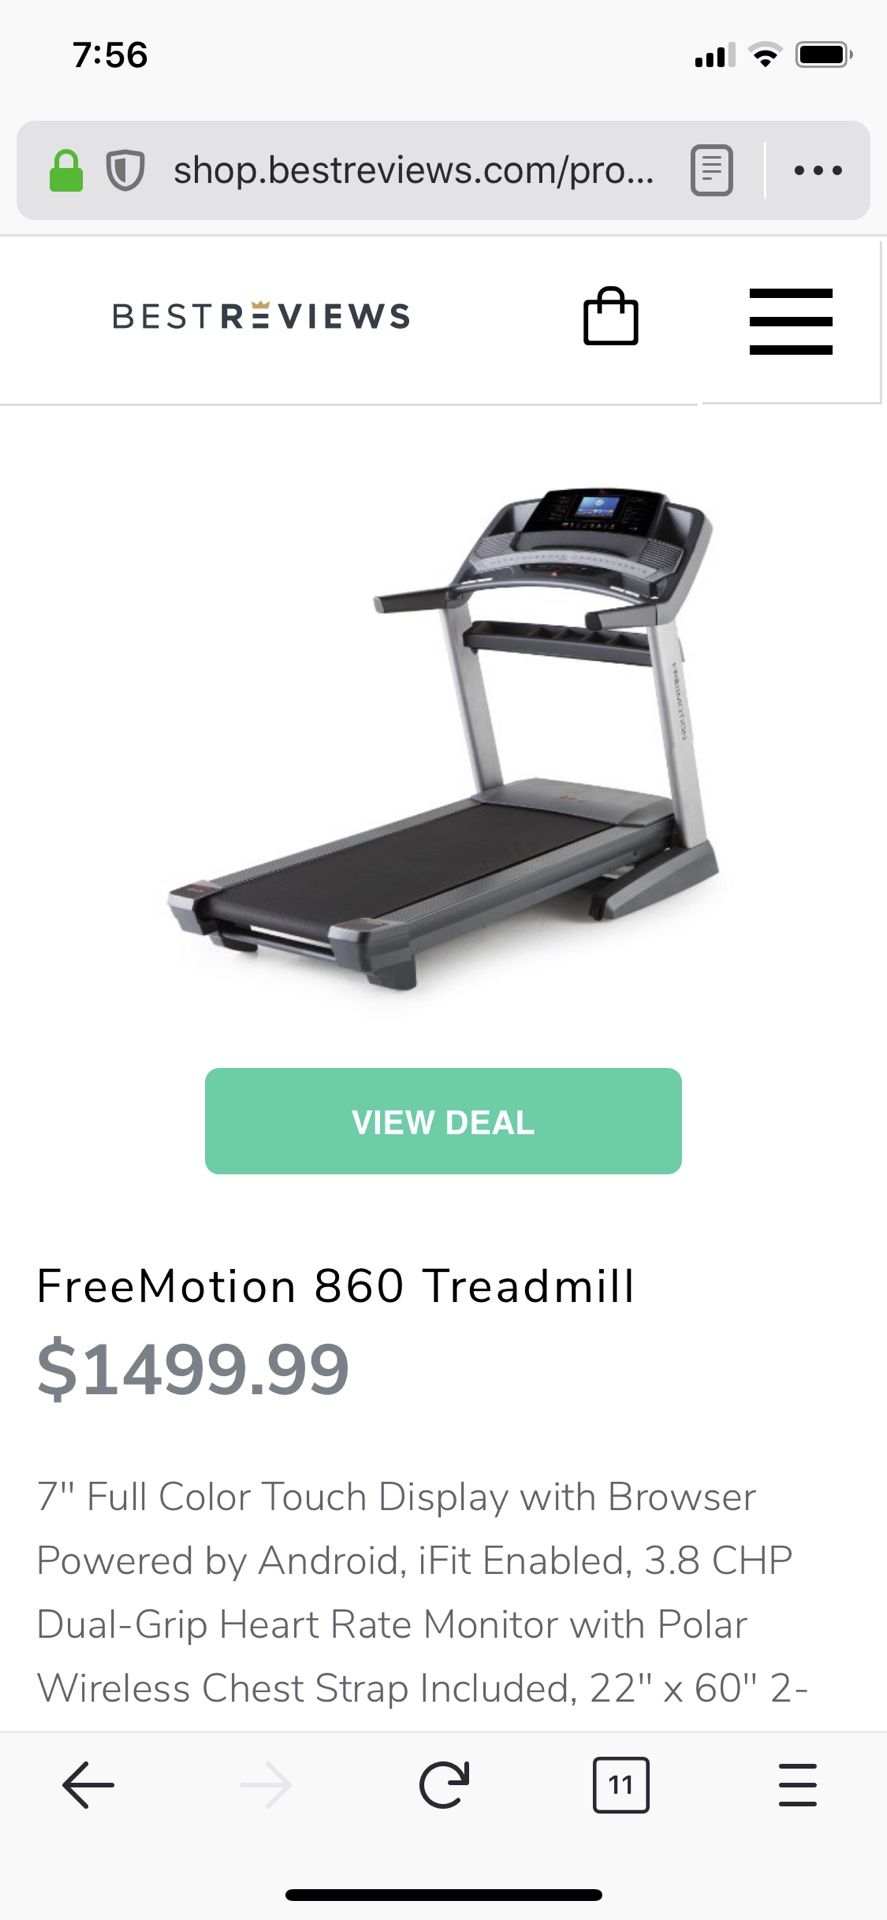 Free motion 860 treadmill